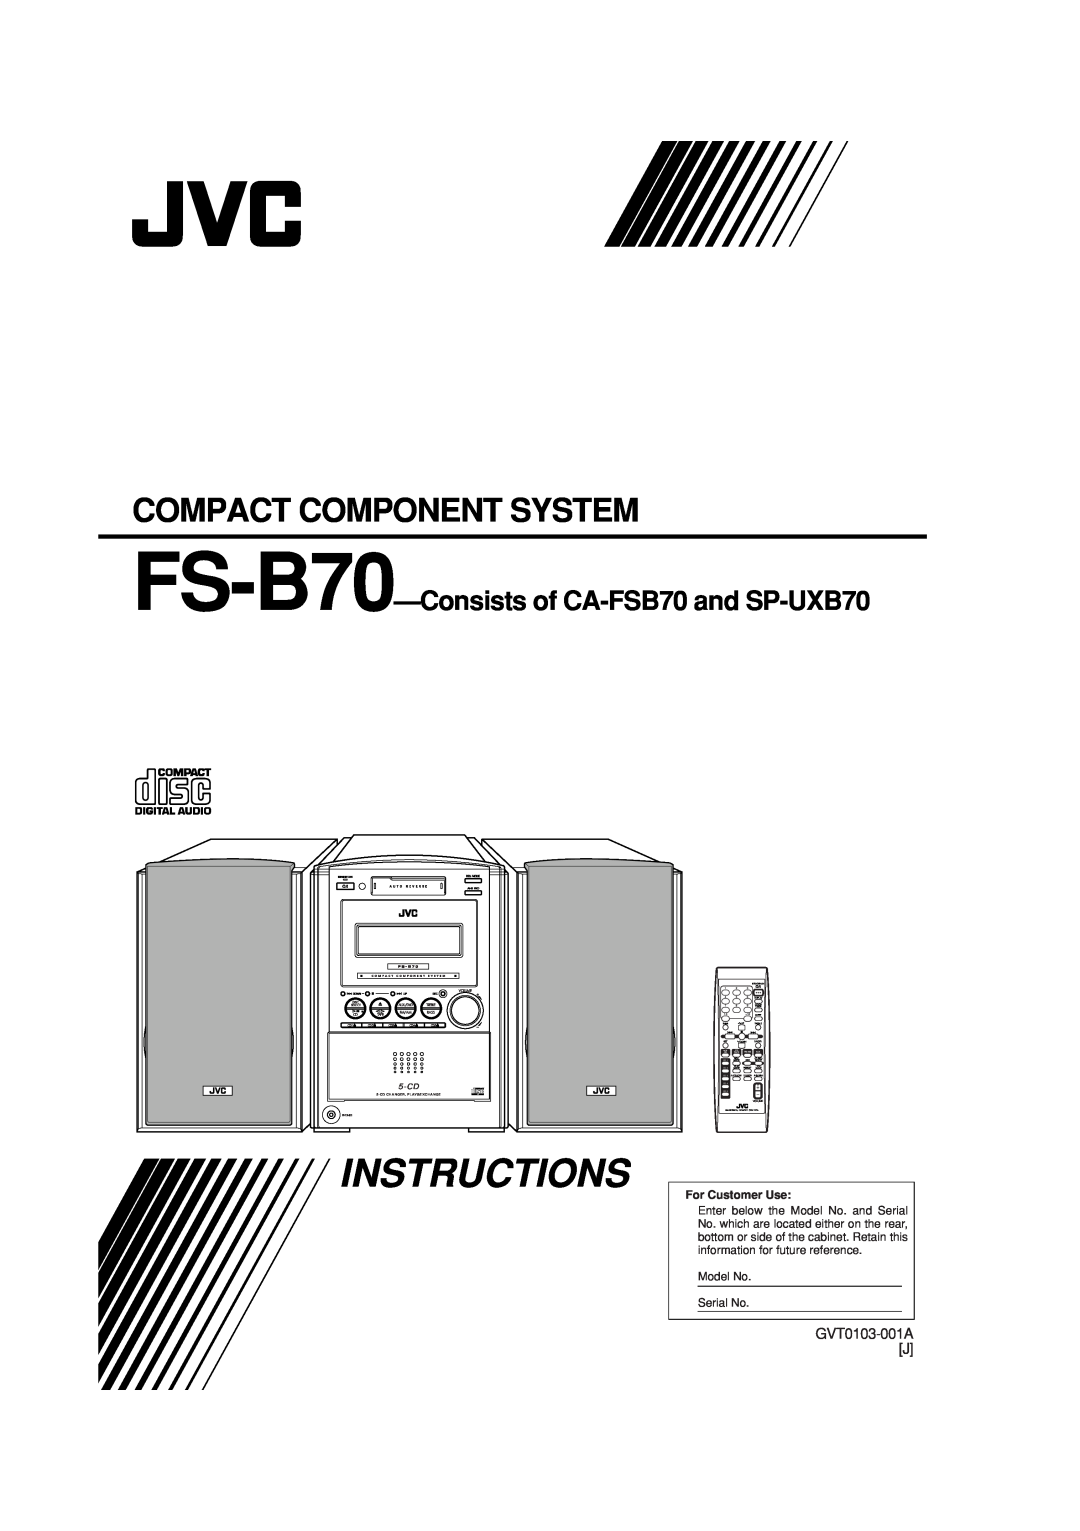 JVC manual Instructions, Compact Component System, FS-B70-Consistsof CA-FSB70and SP-UXB70, GVT0103-001AJ, 5-CD, Volume 